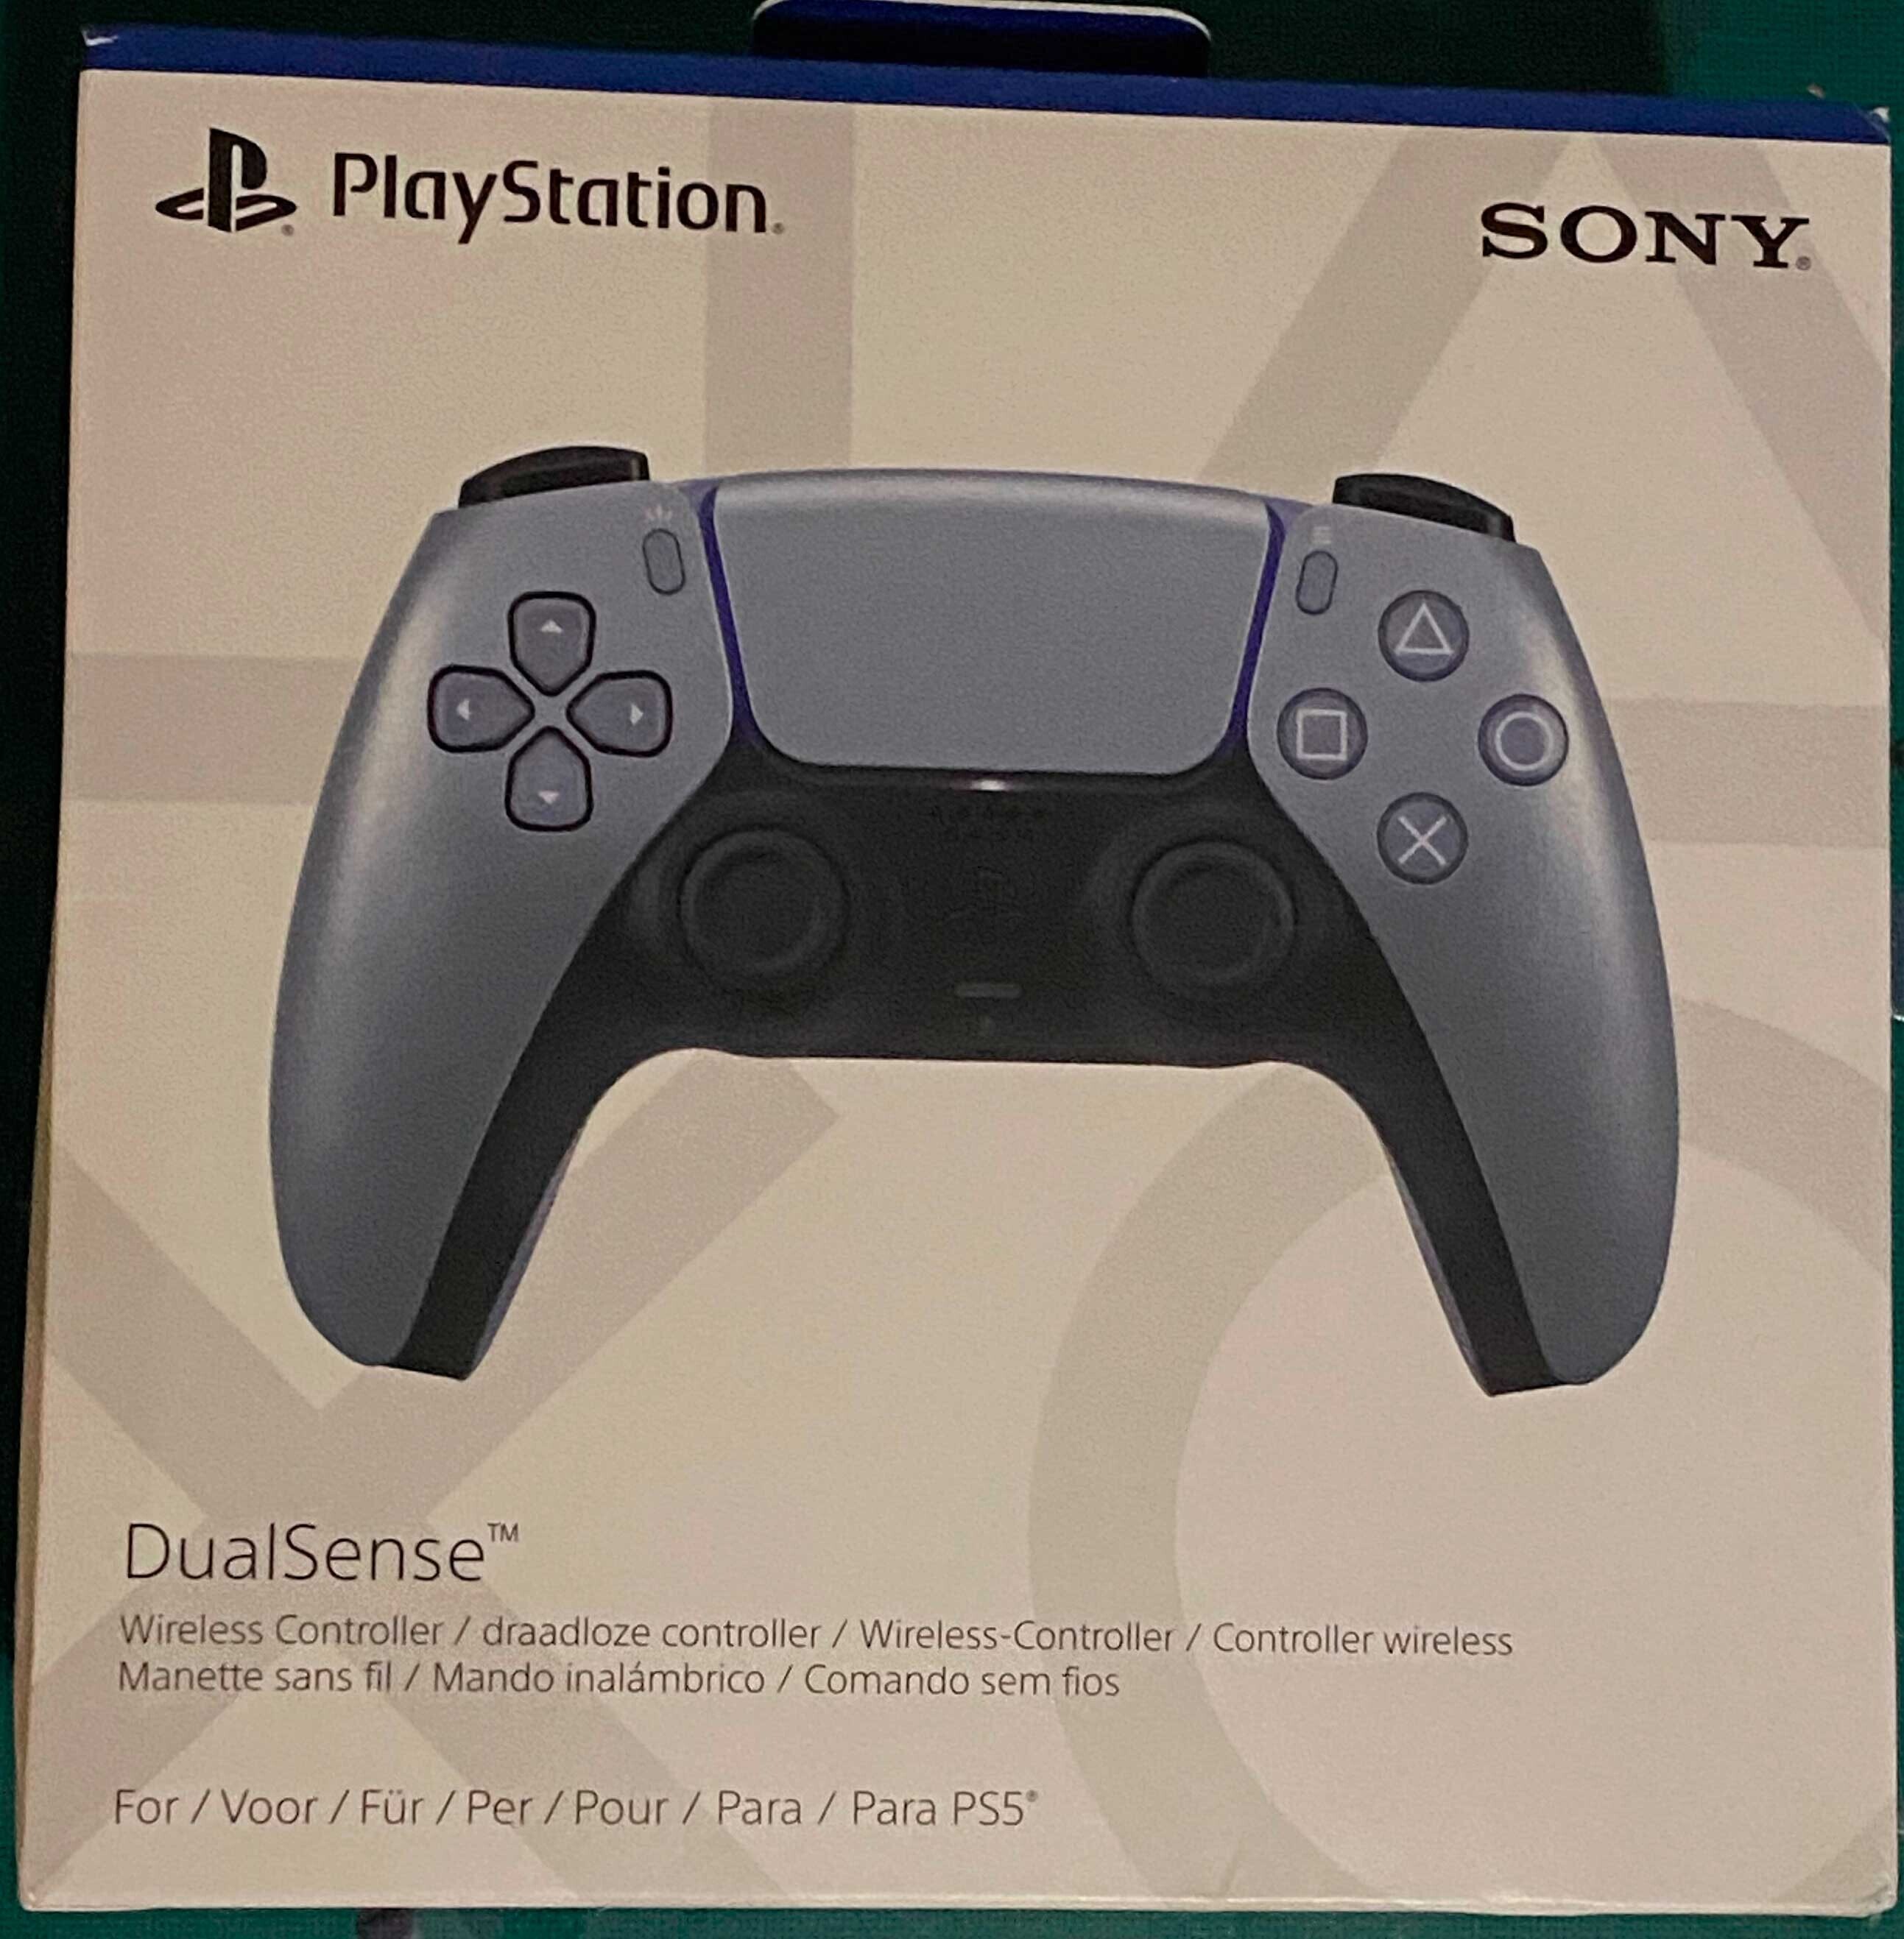  Sony PlayStation 5 DualSense Sterling Silver Controller [EU]